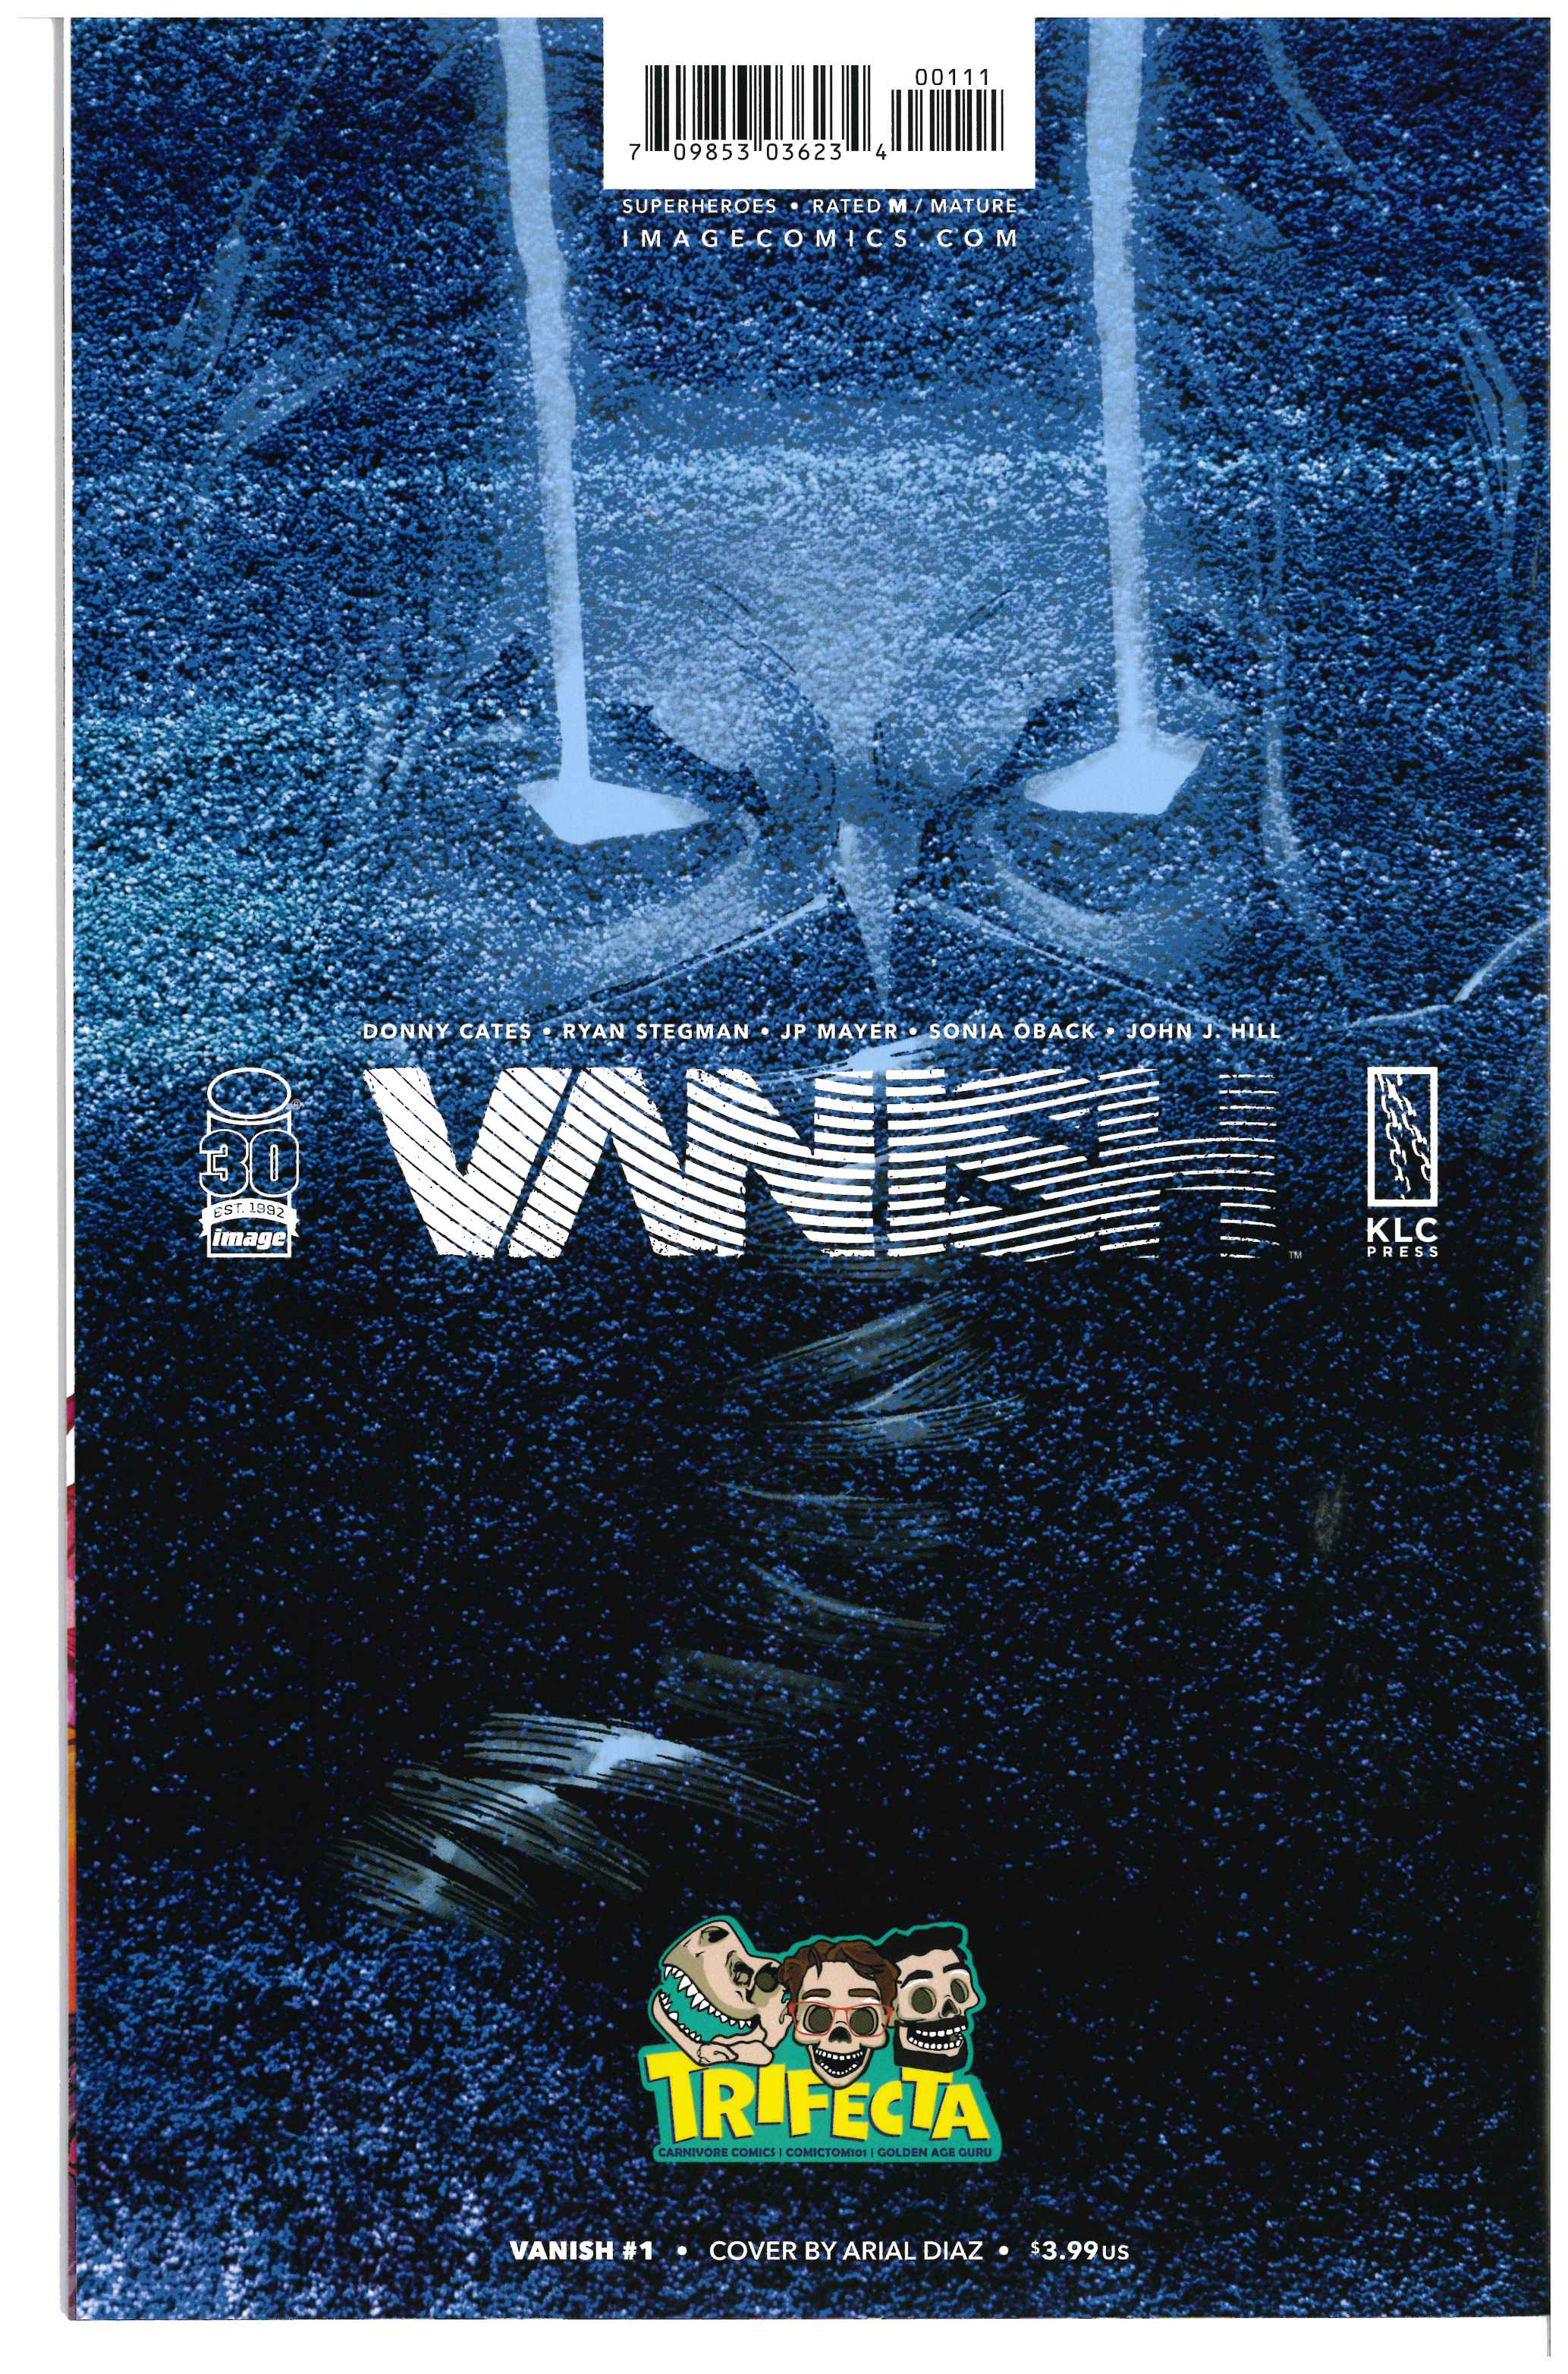 Vanish #1 backside